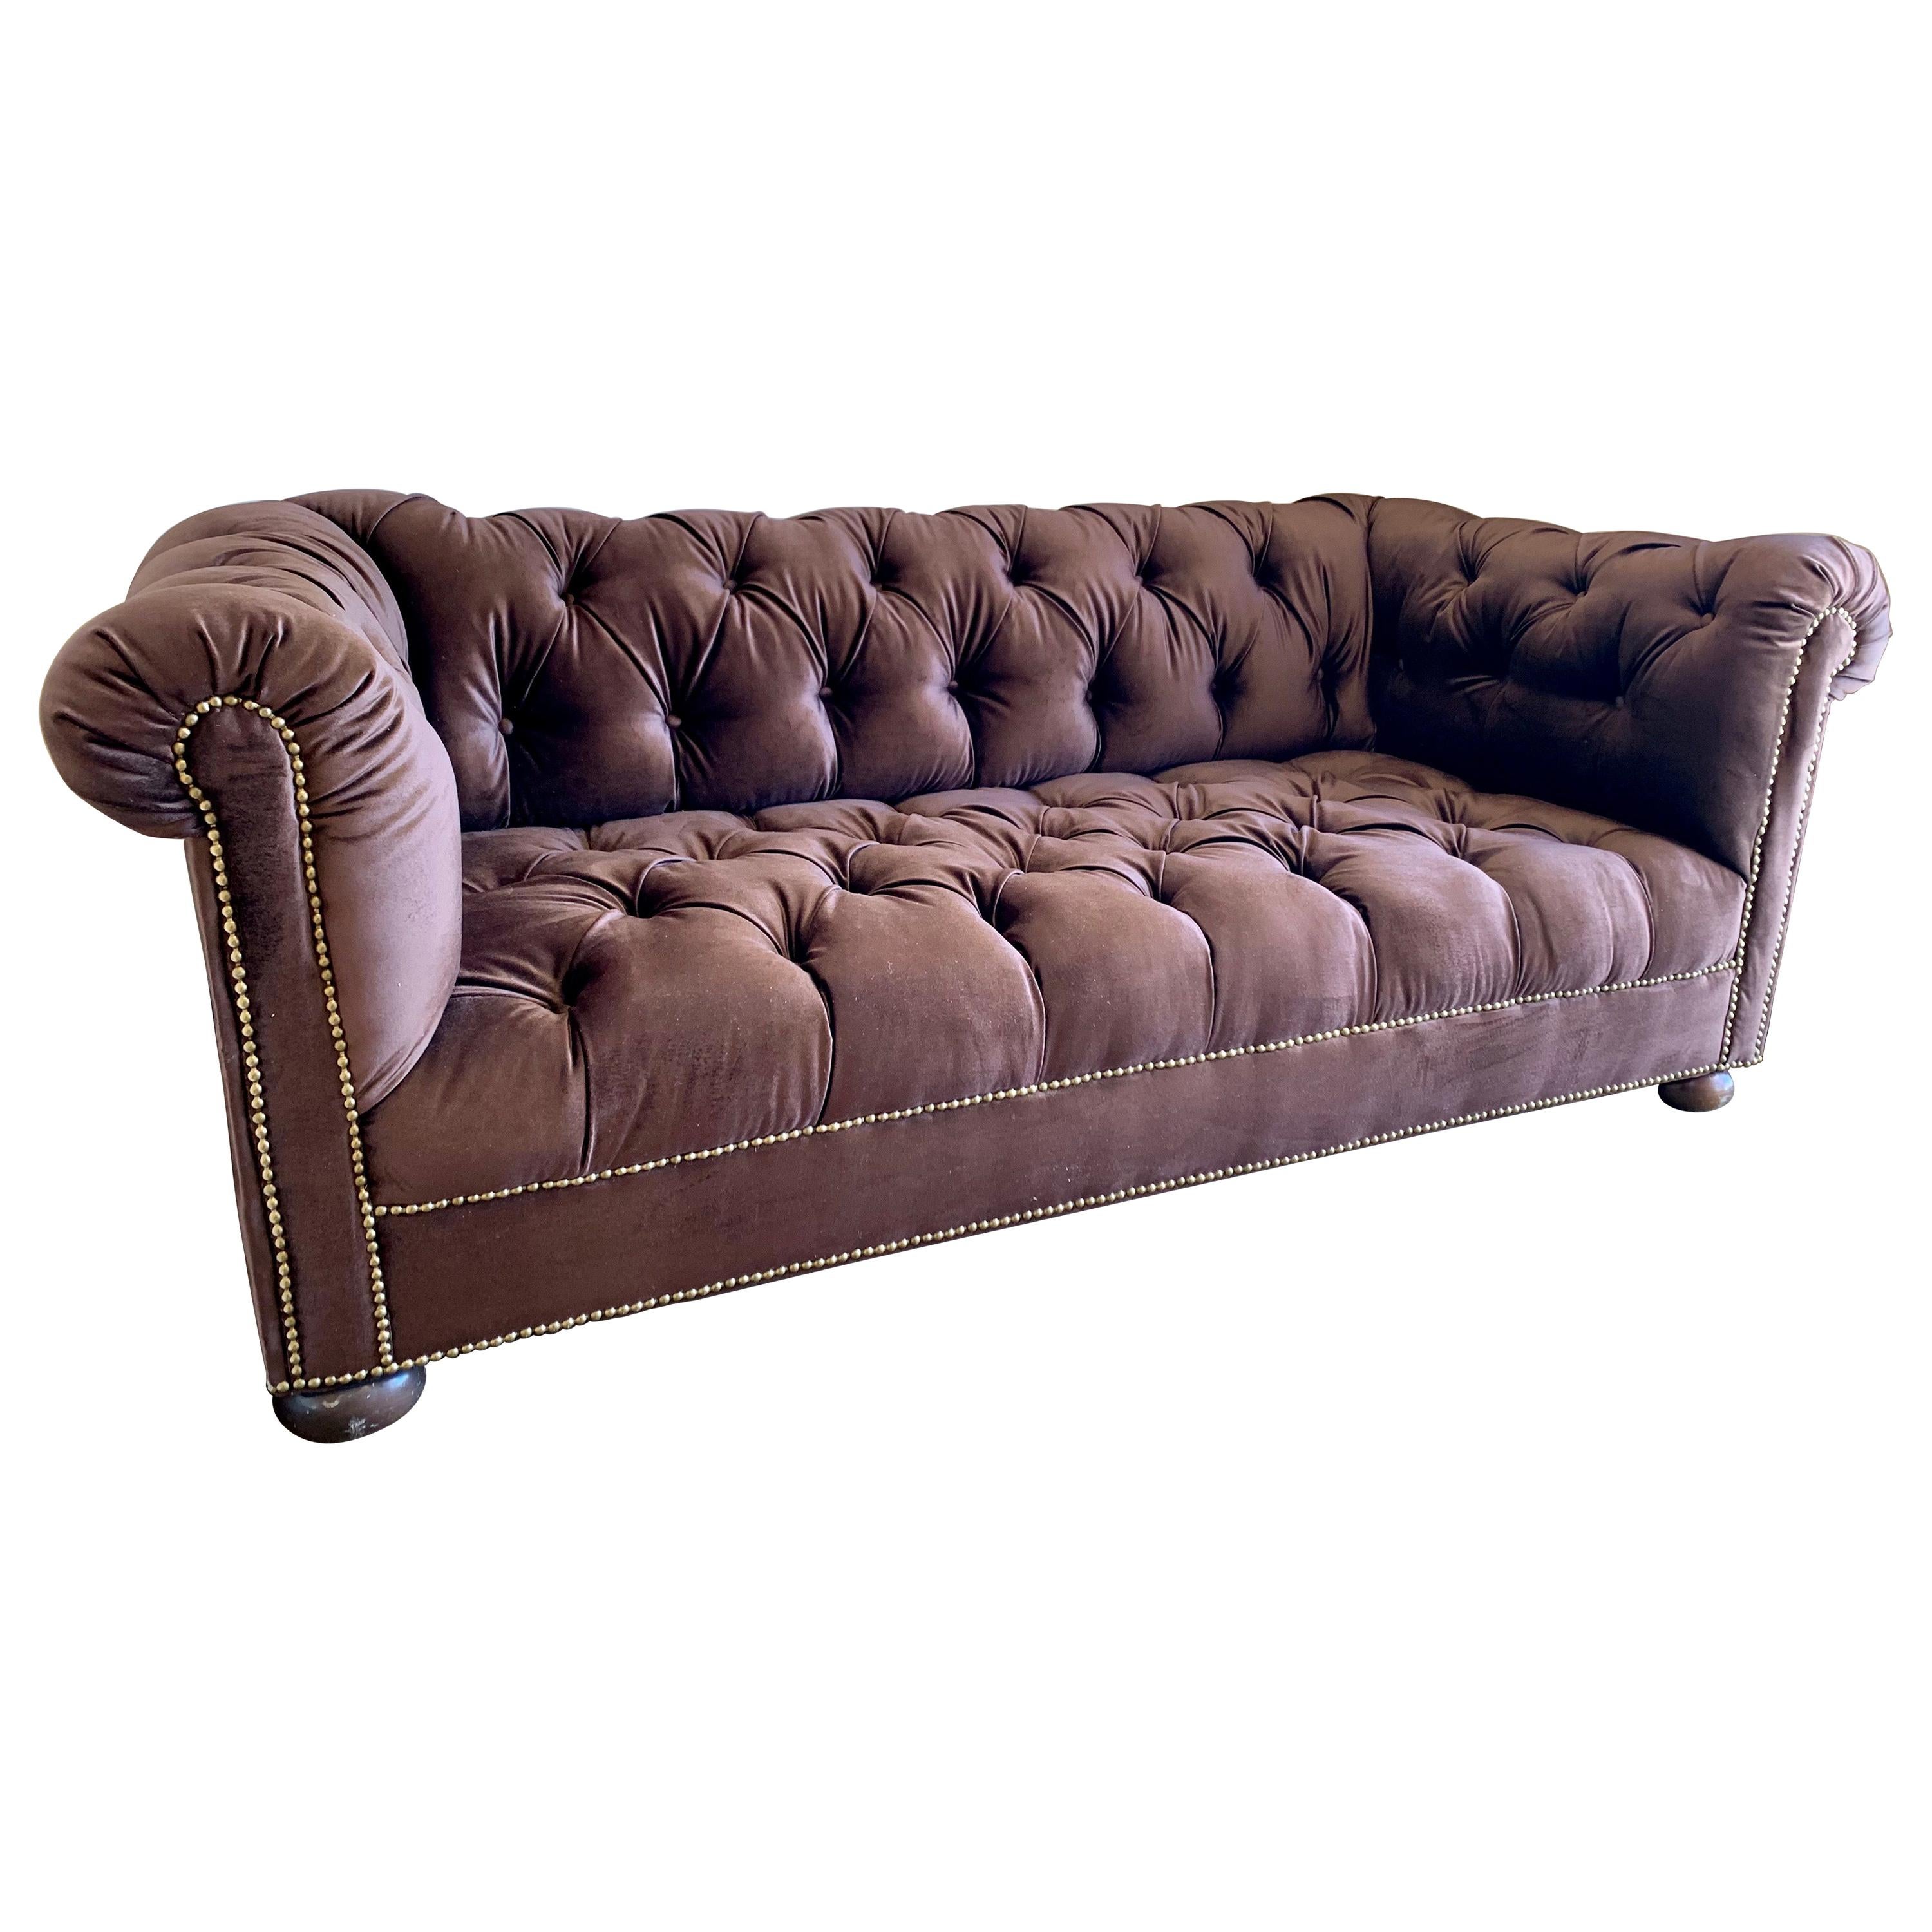 Brunschwig & Fils Chesterfield Sofa Newly Upholstered in Chocolate Brown Velvet